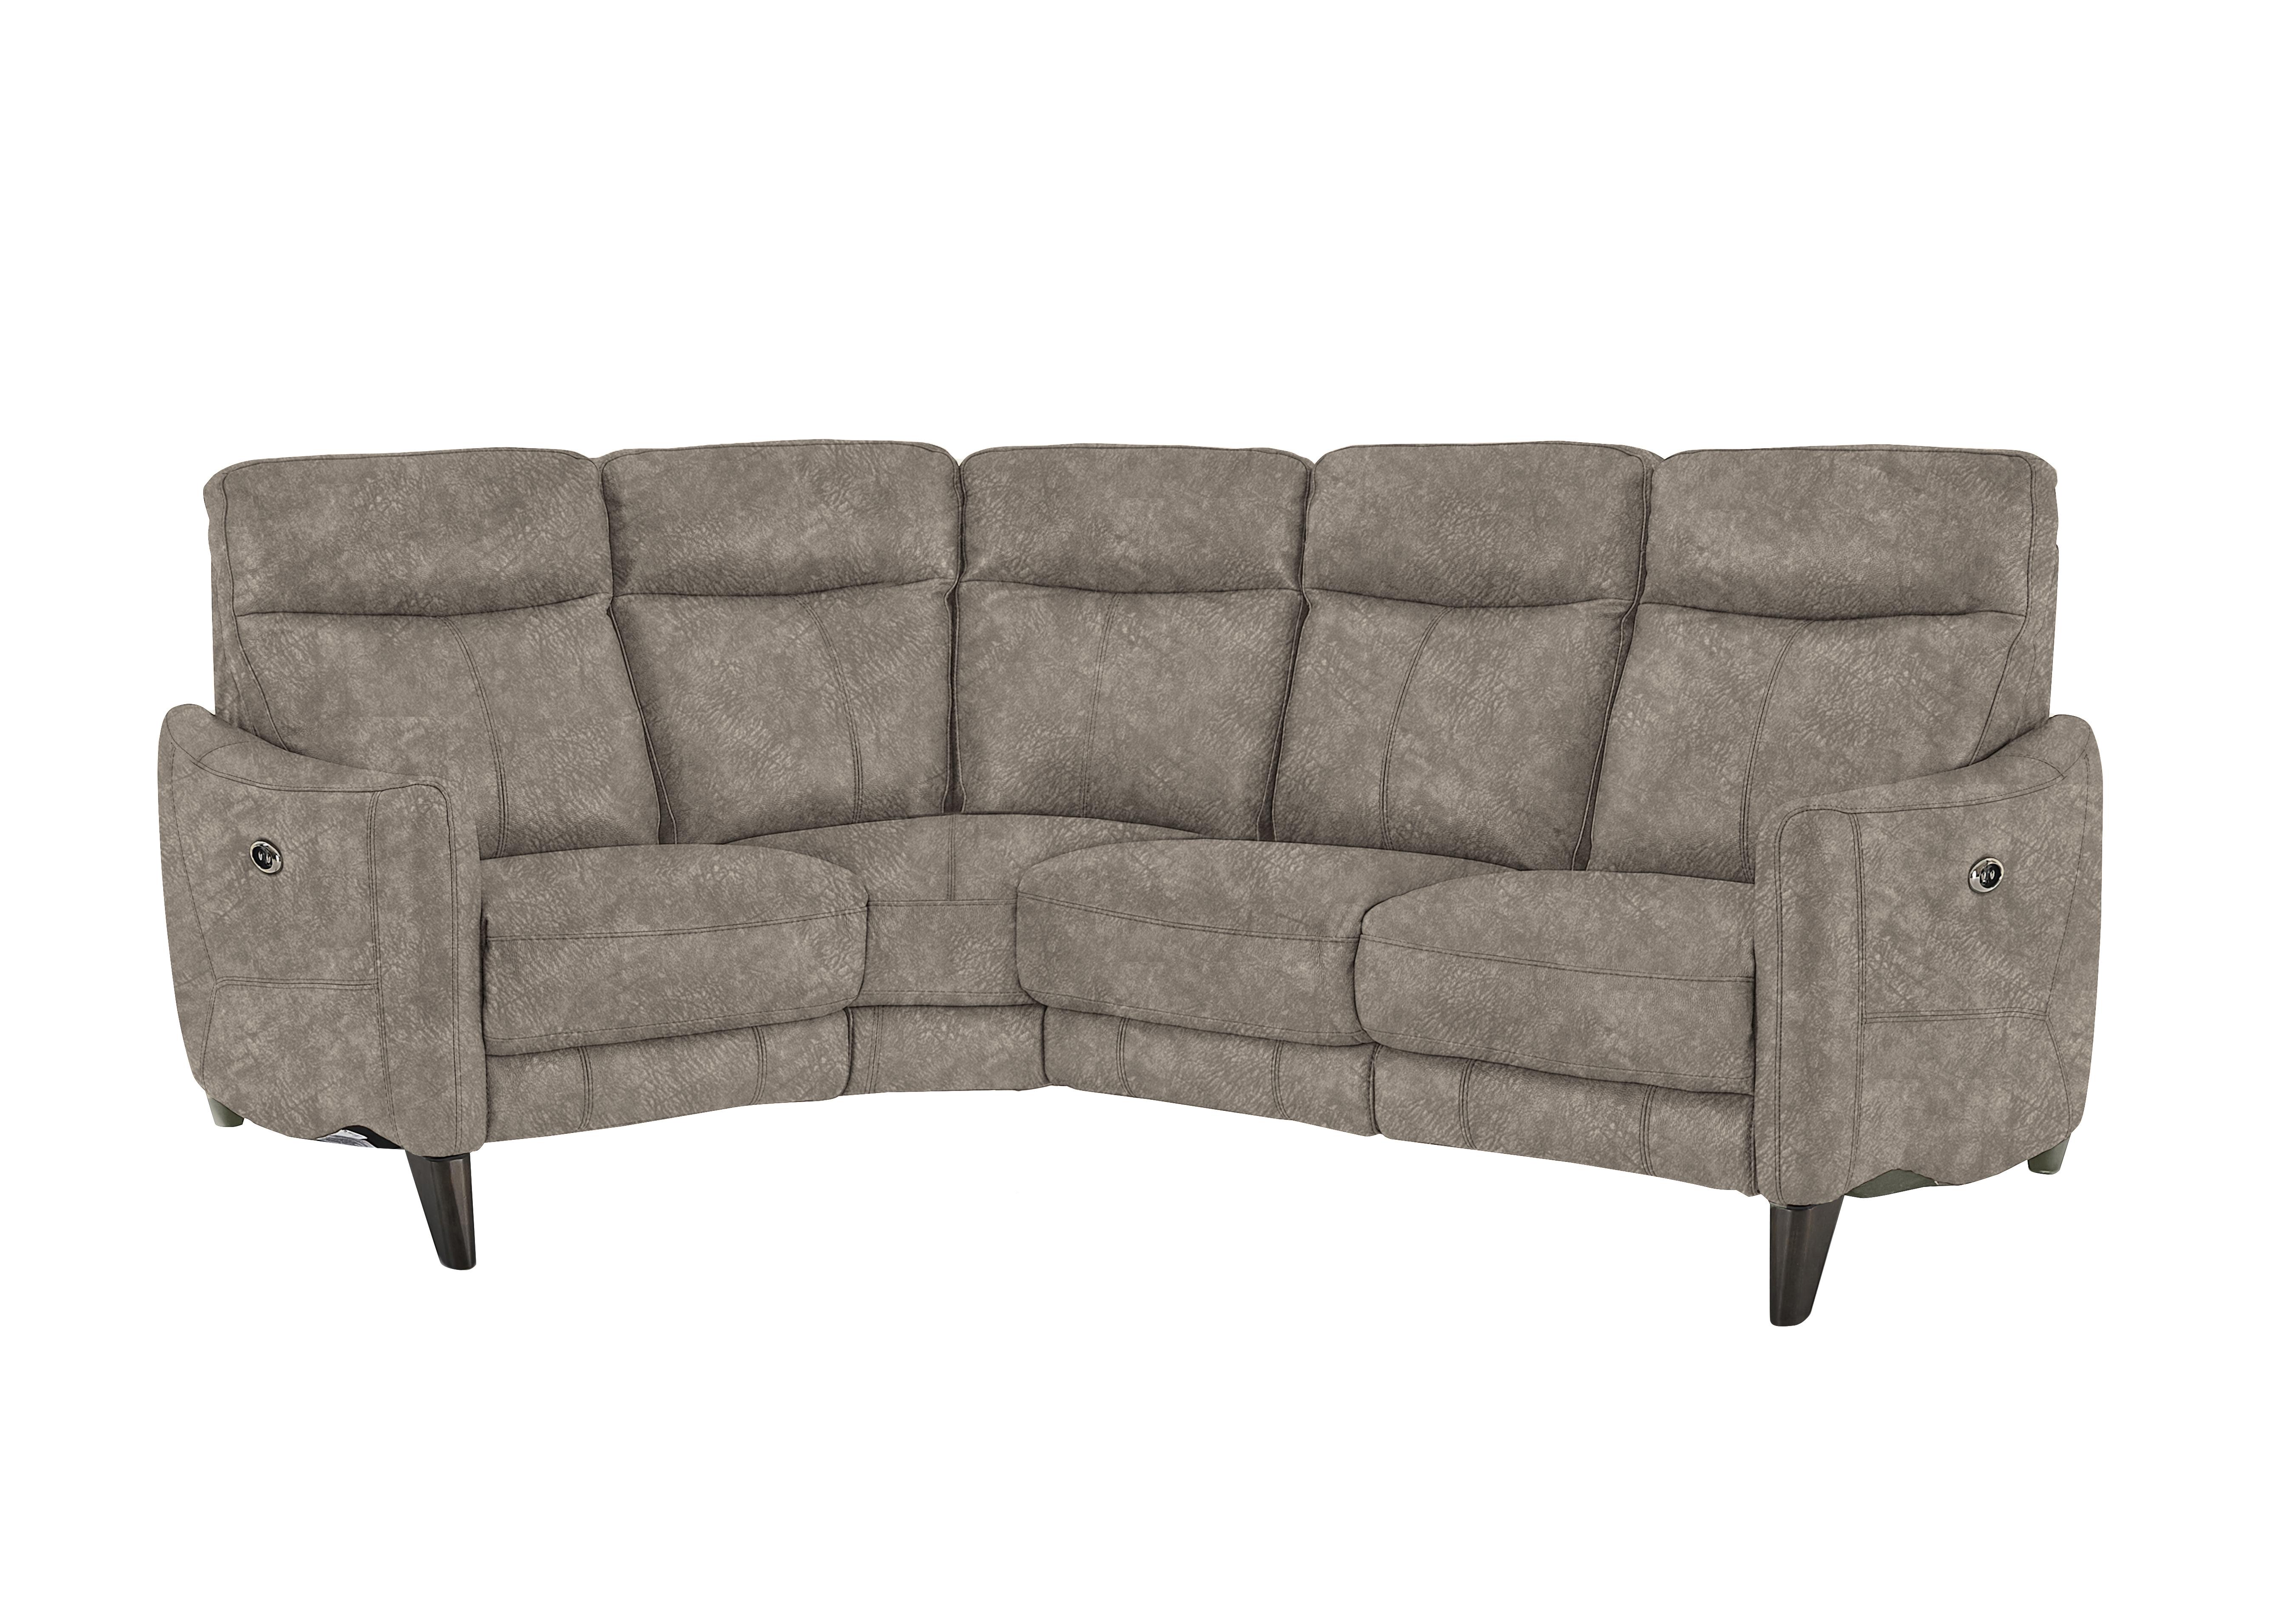 Compact Collection Petit Fabric Corner Sofa in Bfa-Bnn-R29 Fv1 Mink on Furniture Village